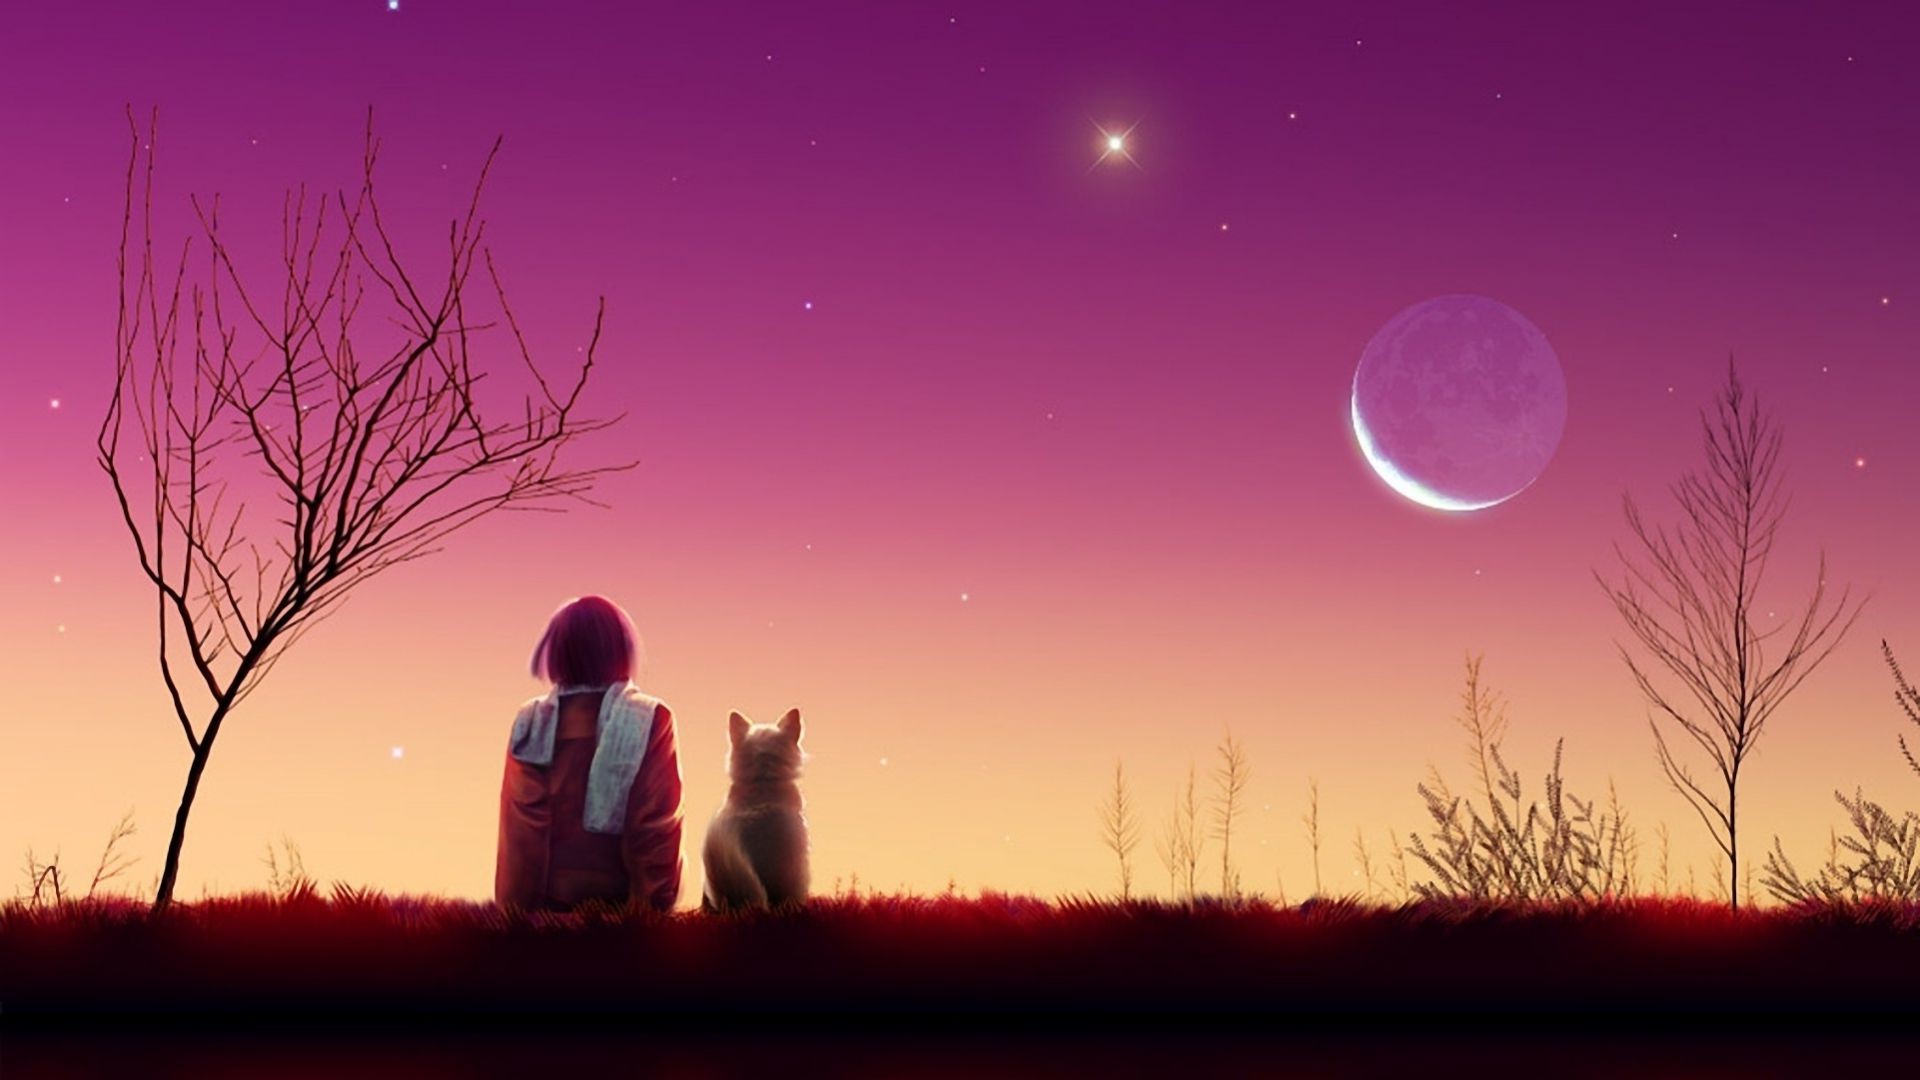 Star cat of the sunset moon evening girl Art landscape - Phone wallpapers